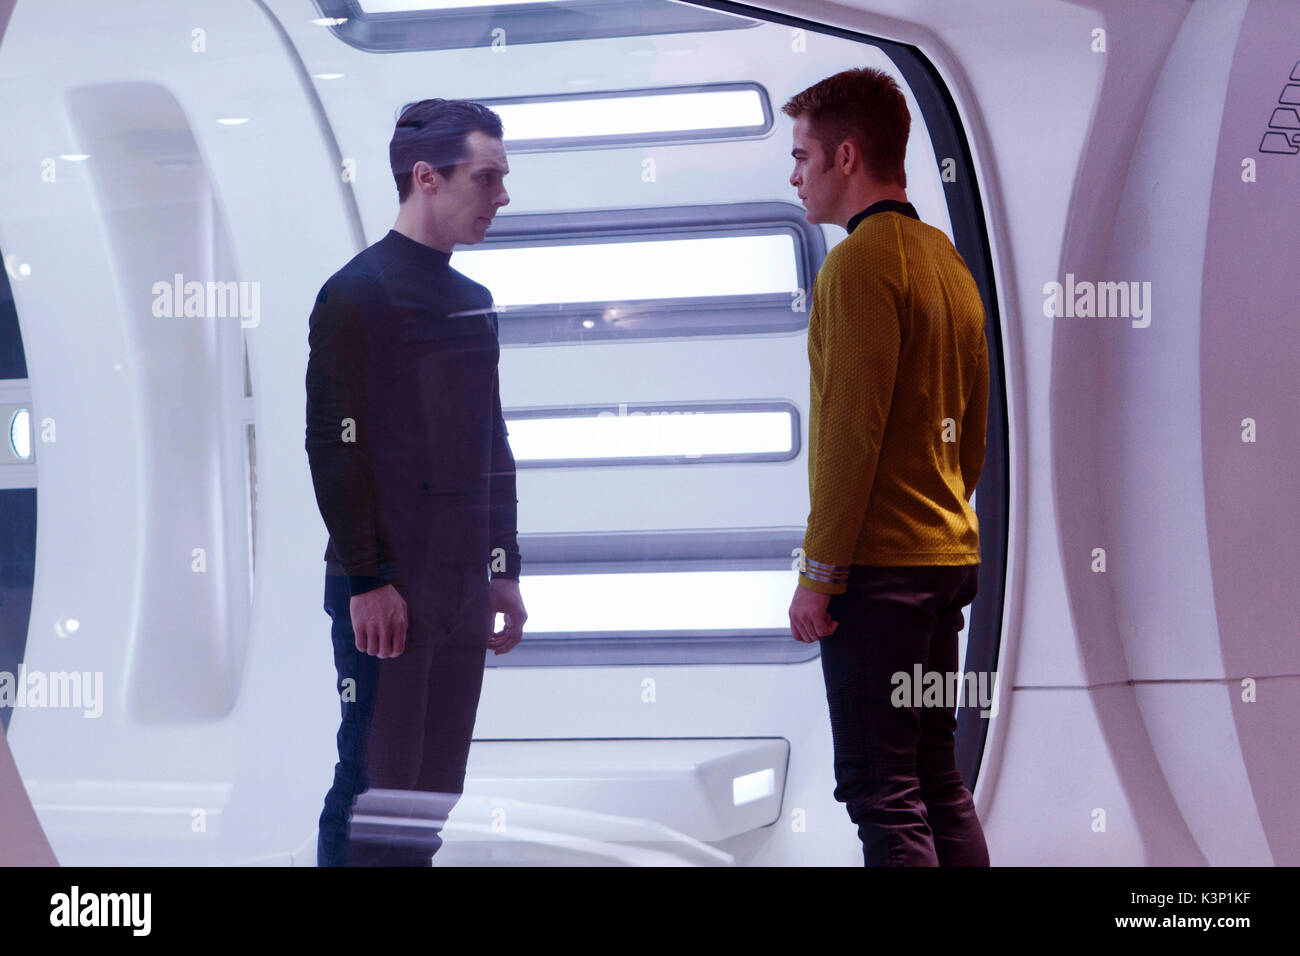 STAR TREK INTO DARKNESS [US 2013] BENEDICT CUMBERBATCH as Khan, CHRIS PINE as Captain James T. Kirk     Date: 2013 Stock Photo